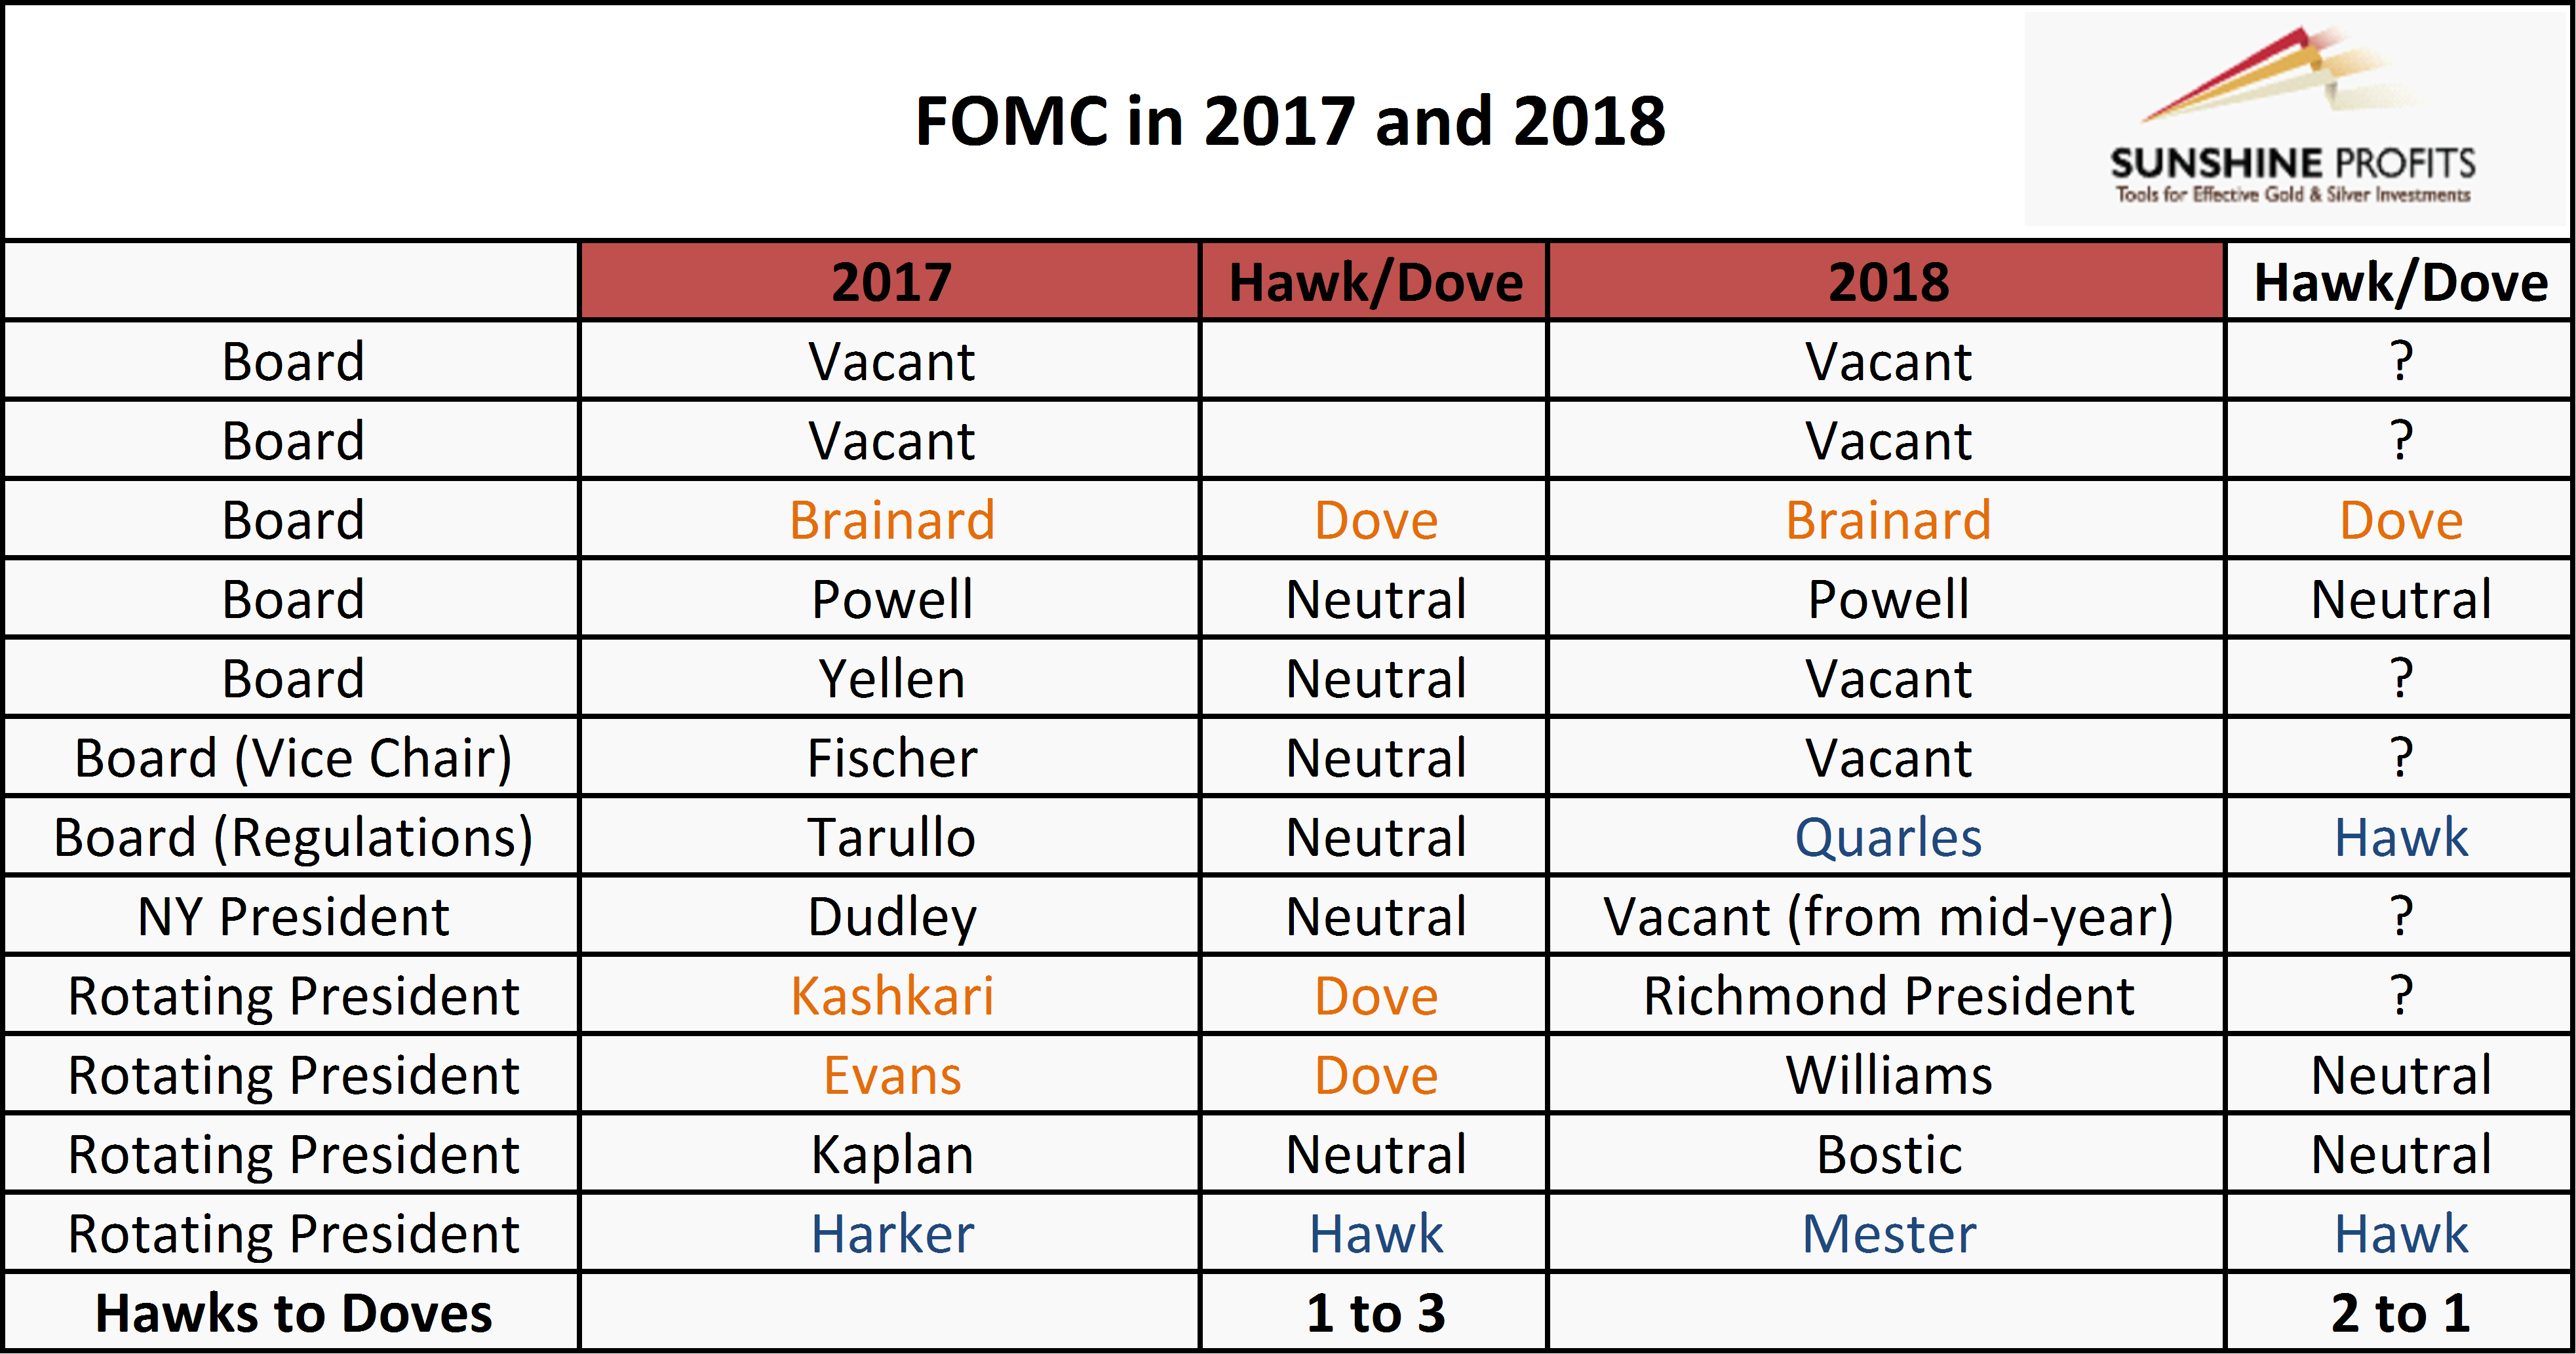 FOMC in 2018